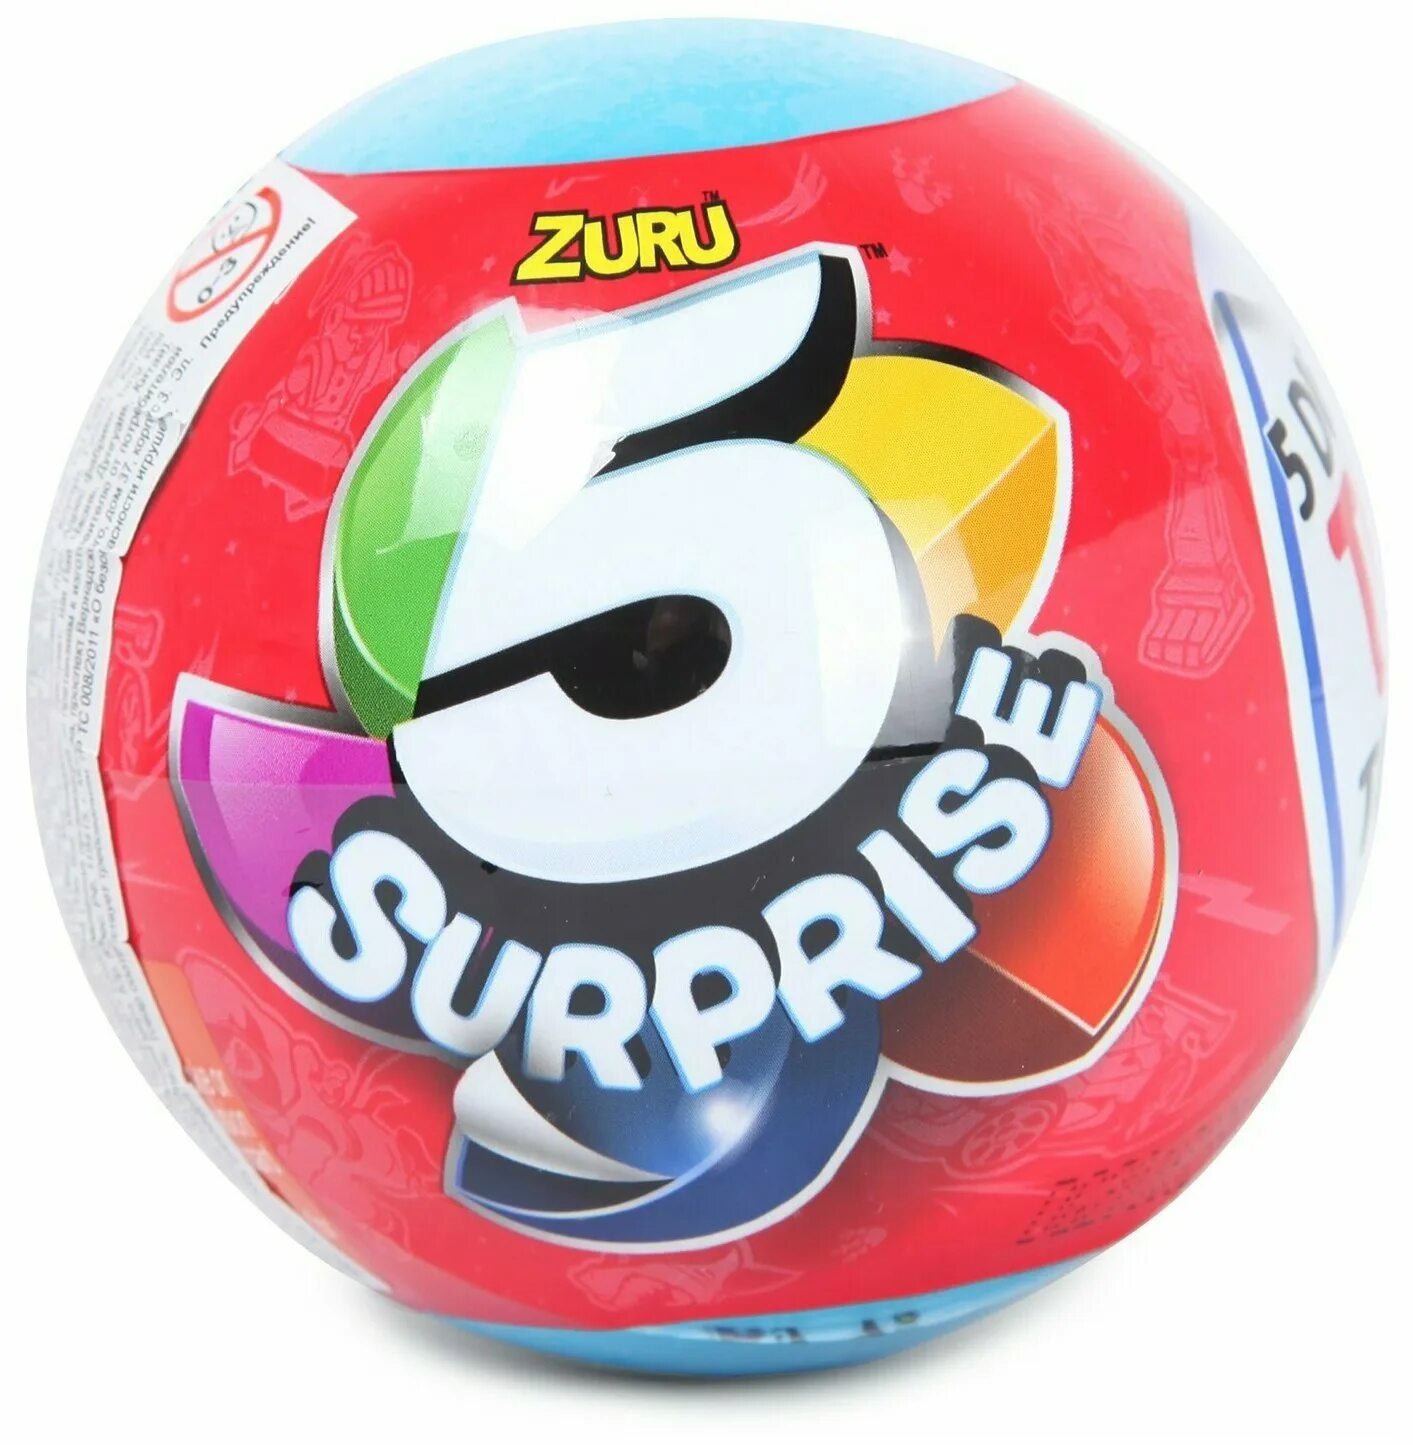 Шар Zuru 5 сюрпризов. 5 Сюрпризов в шаре мини игрушки. Сюрприз озон